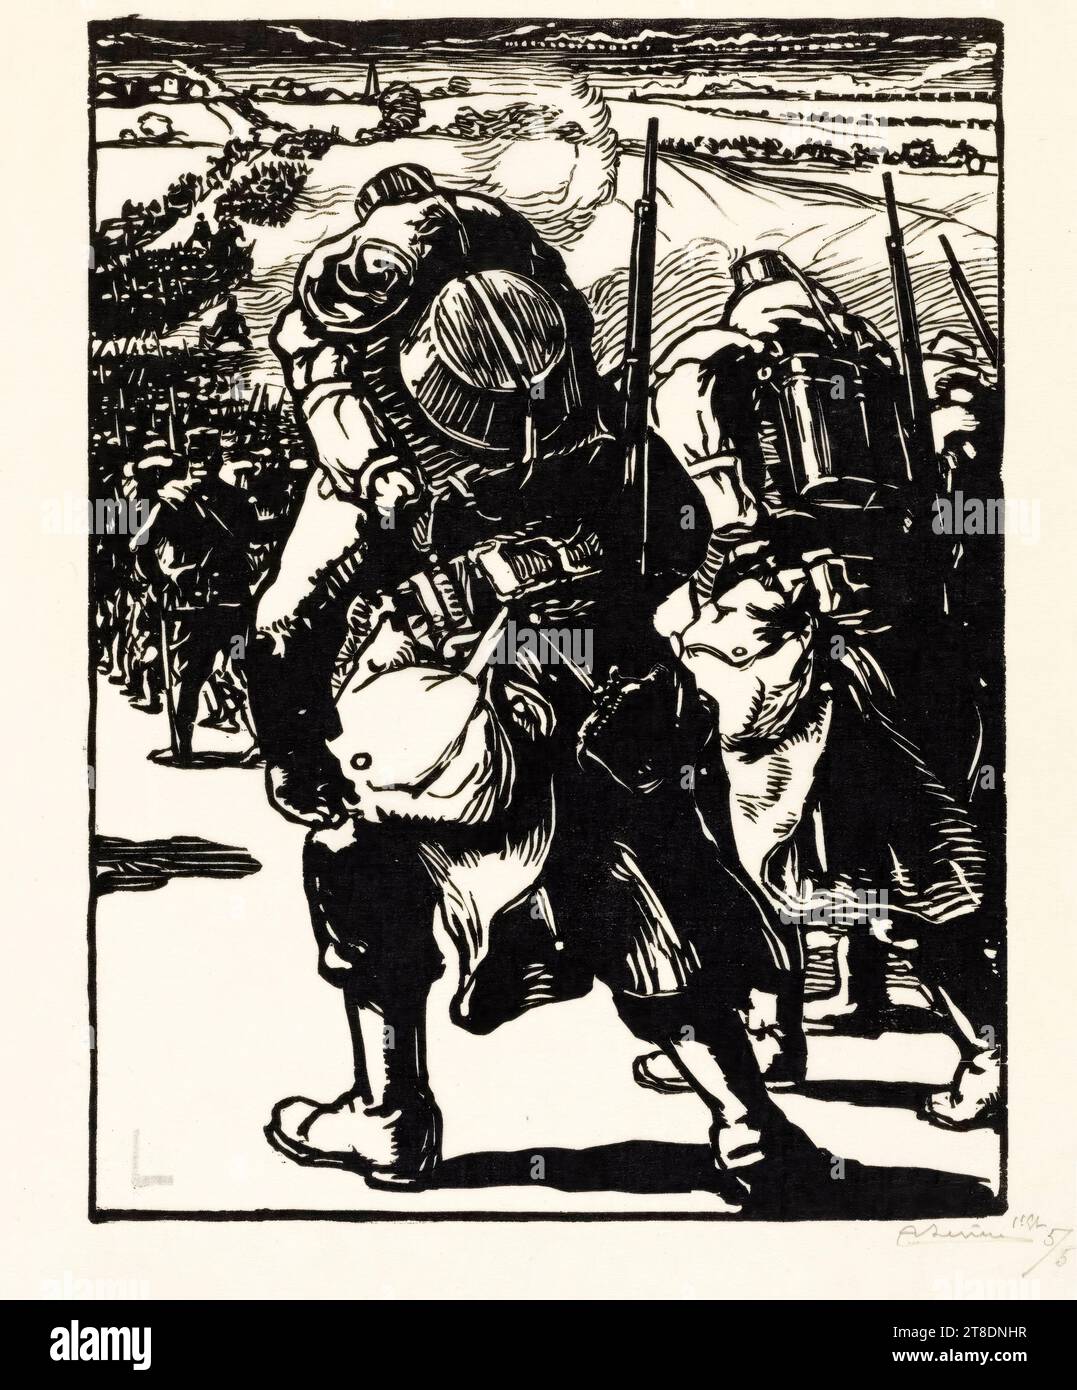 Auguste-Louis Lepère, Le Concentration (The Concentration of Troops), woodcut print, 1914 Stock Photo